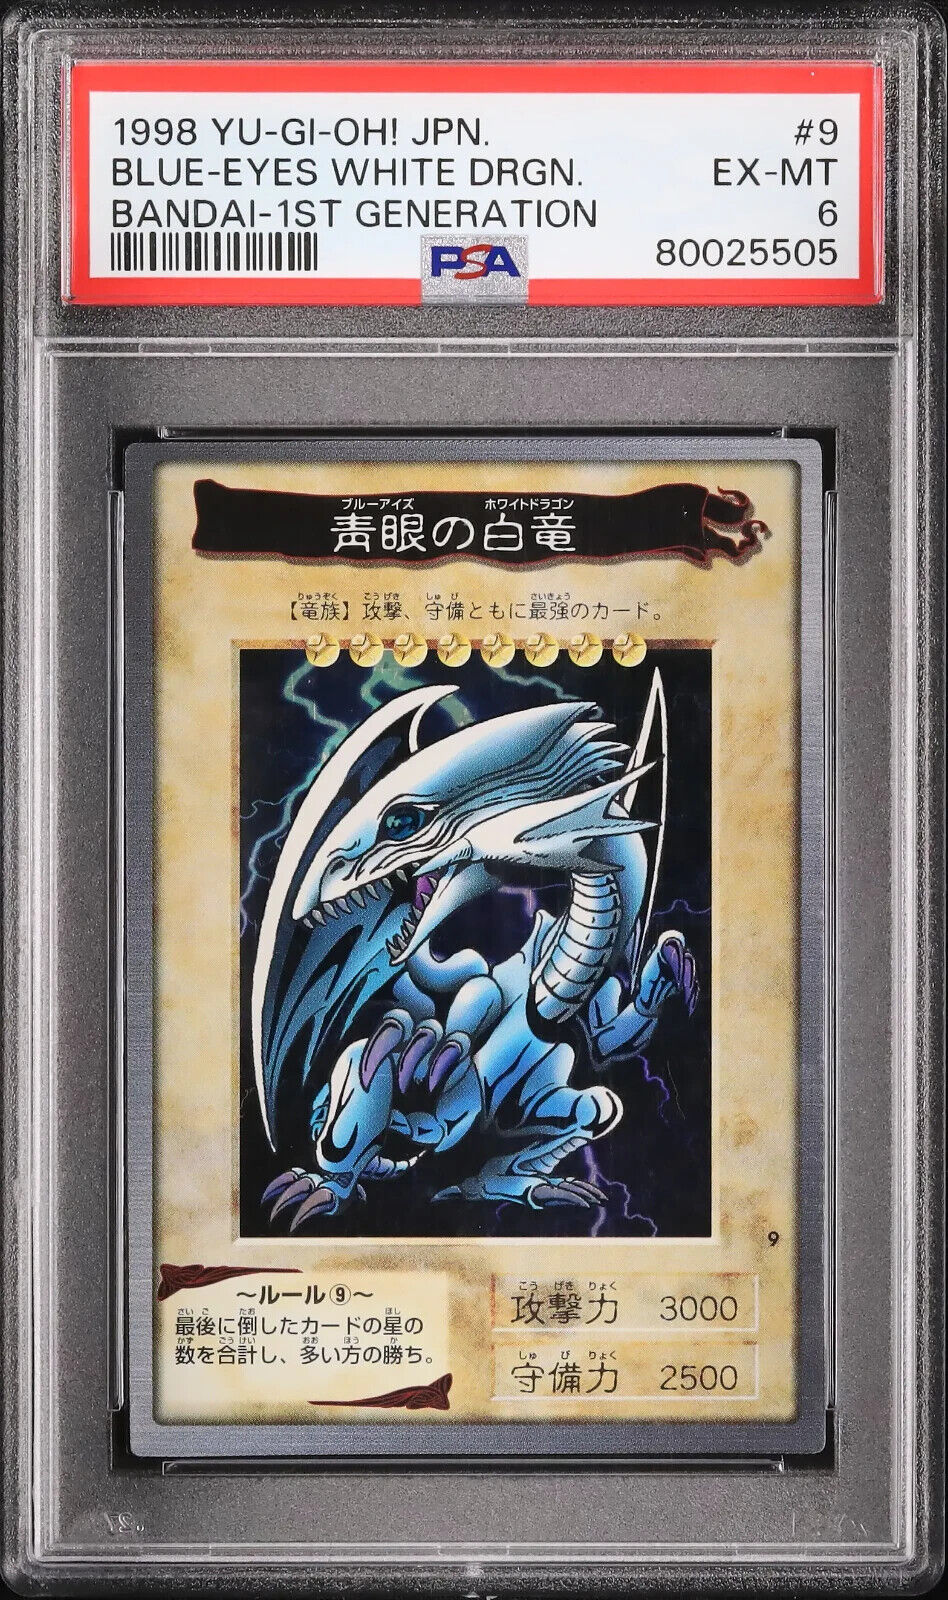 Blue-Eyes White Dragon No.9 Yu-Gi-Oh 1998-1999 Japanese PSA 6 Card BANDAI